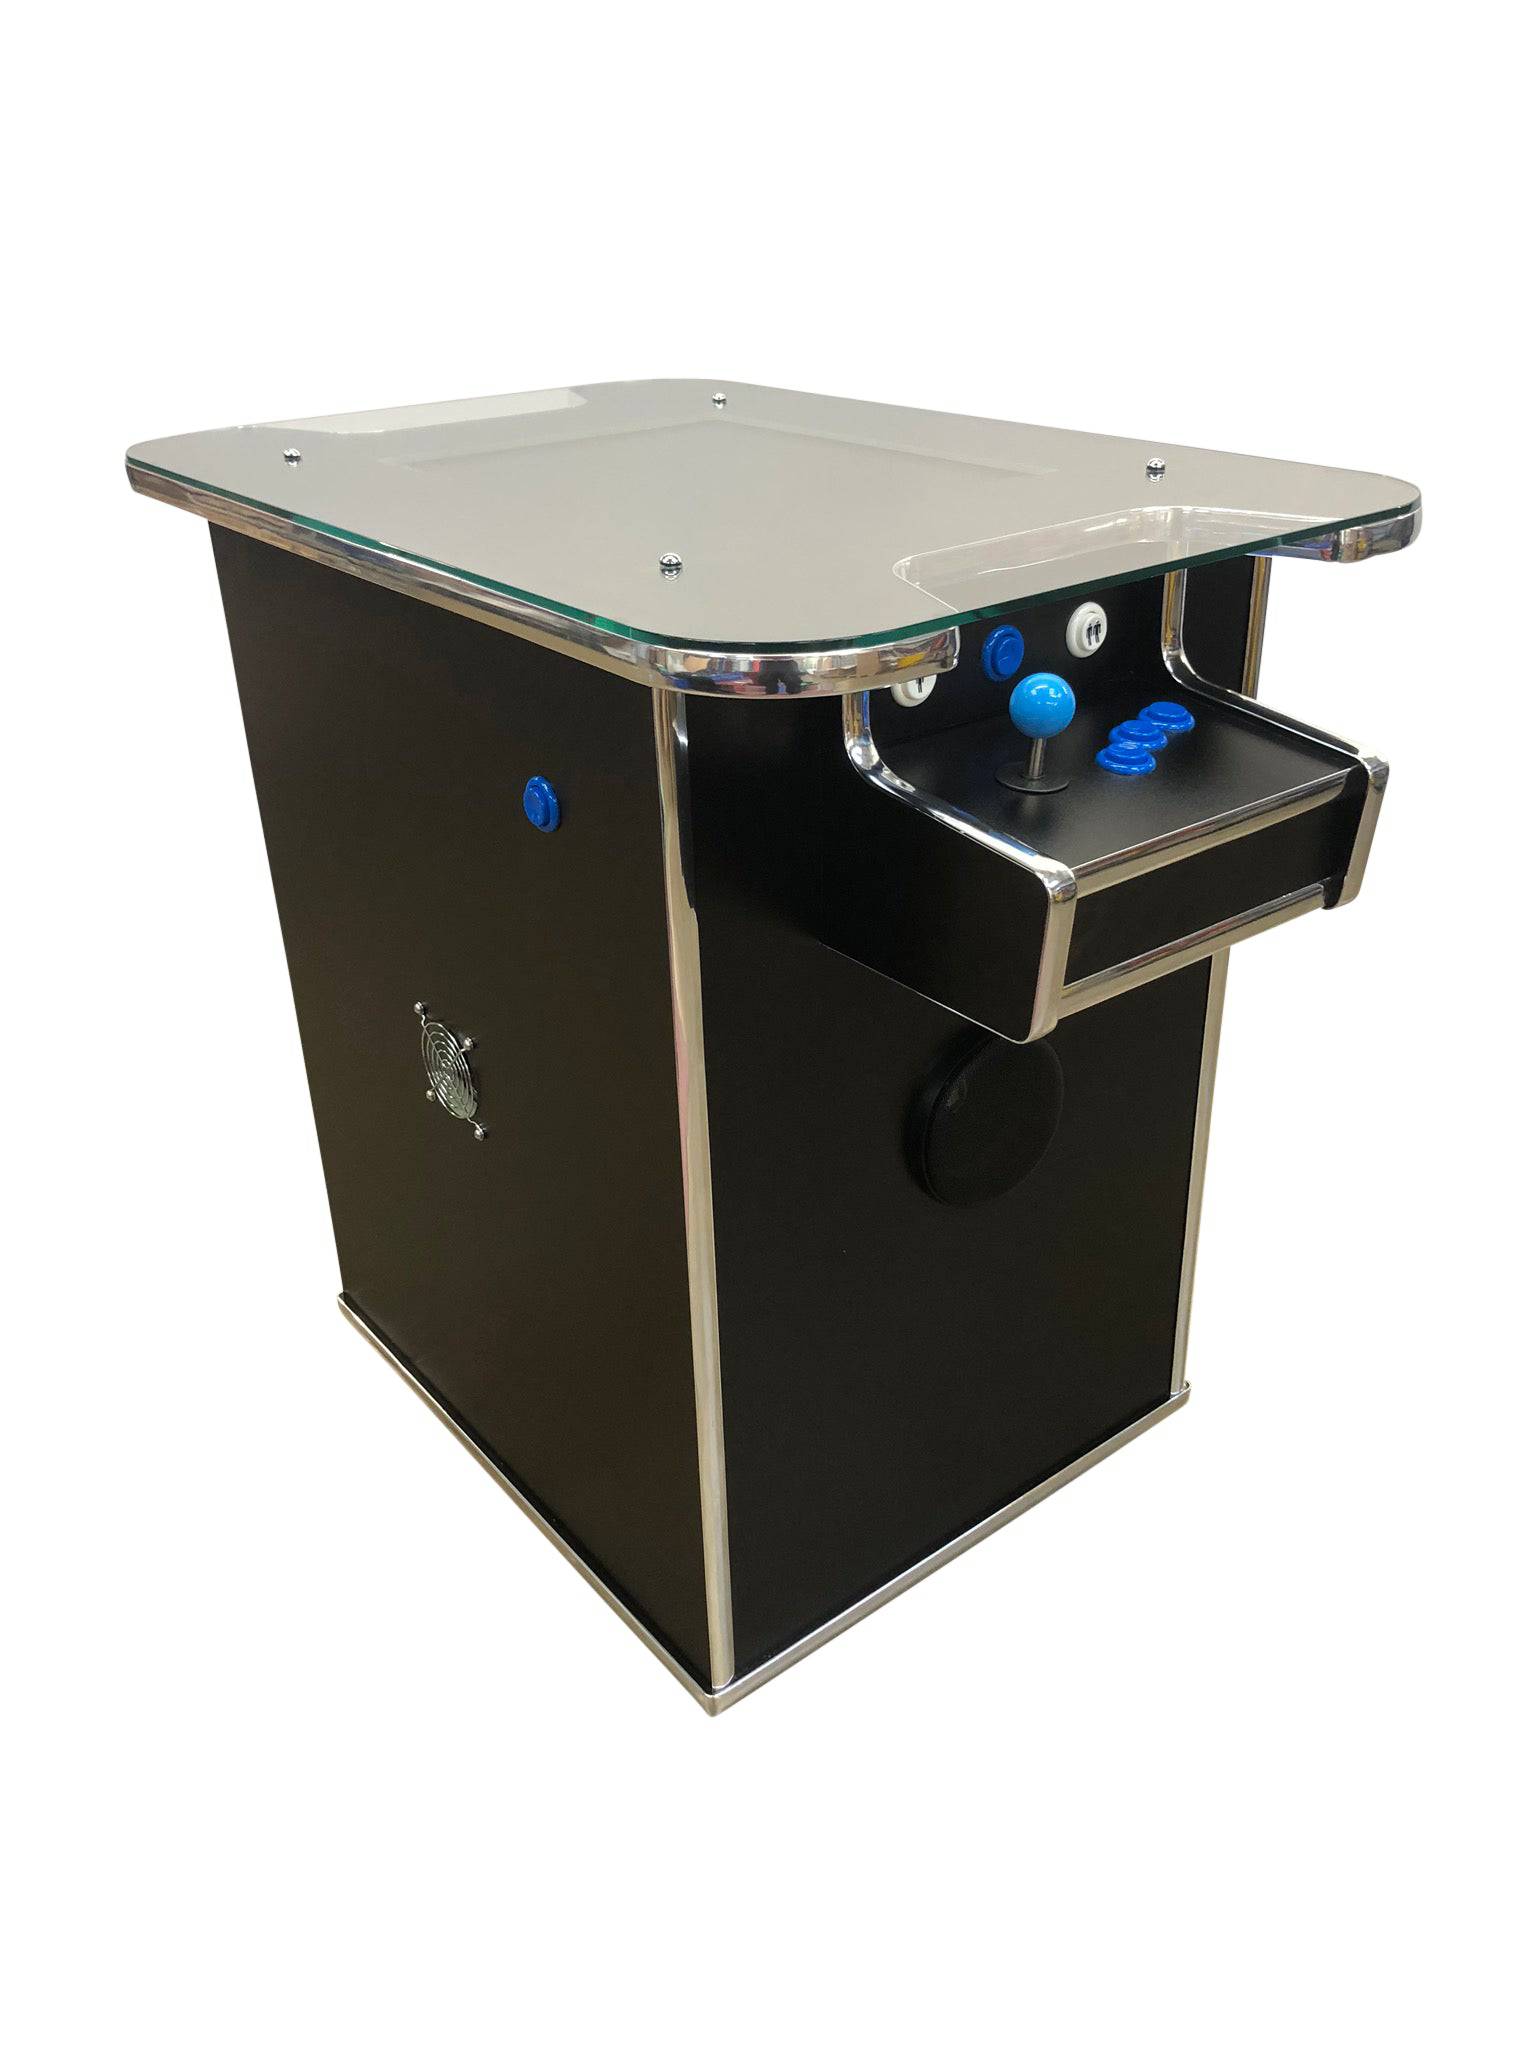 Classic Blue and Black Arcade Cocktail Table - Flatout Arcades